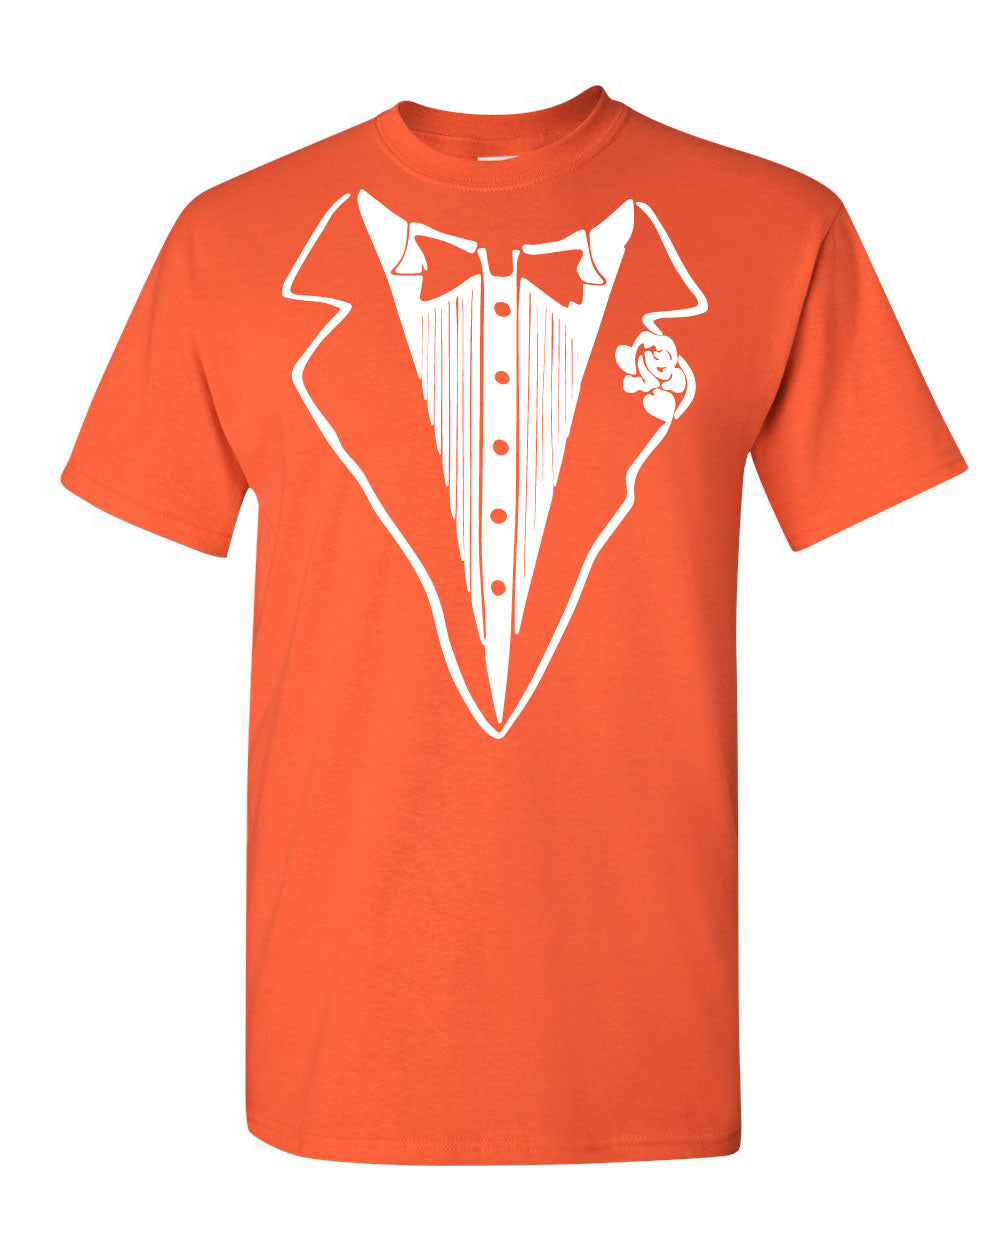 Tuxedo Funny T-Shirt Tux Bachelor Party Wedding Groom Tee Shirt | eBay